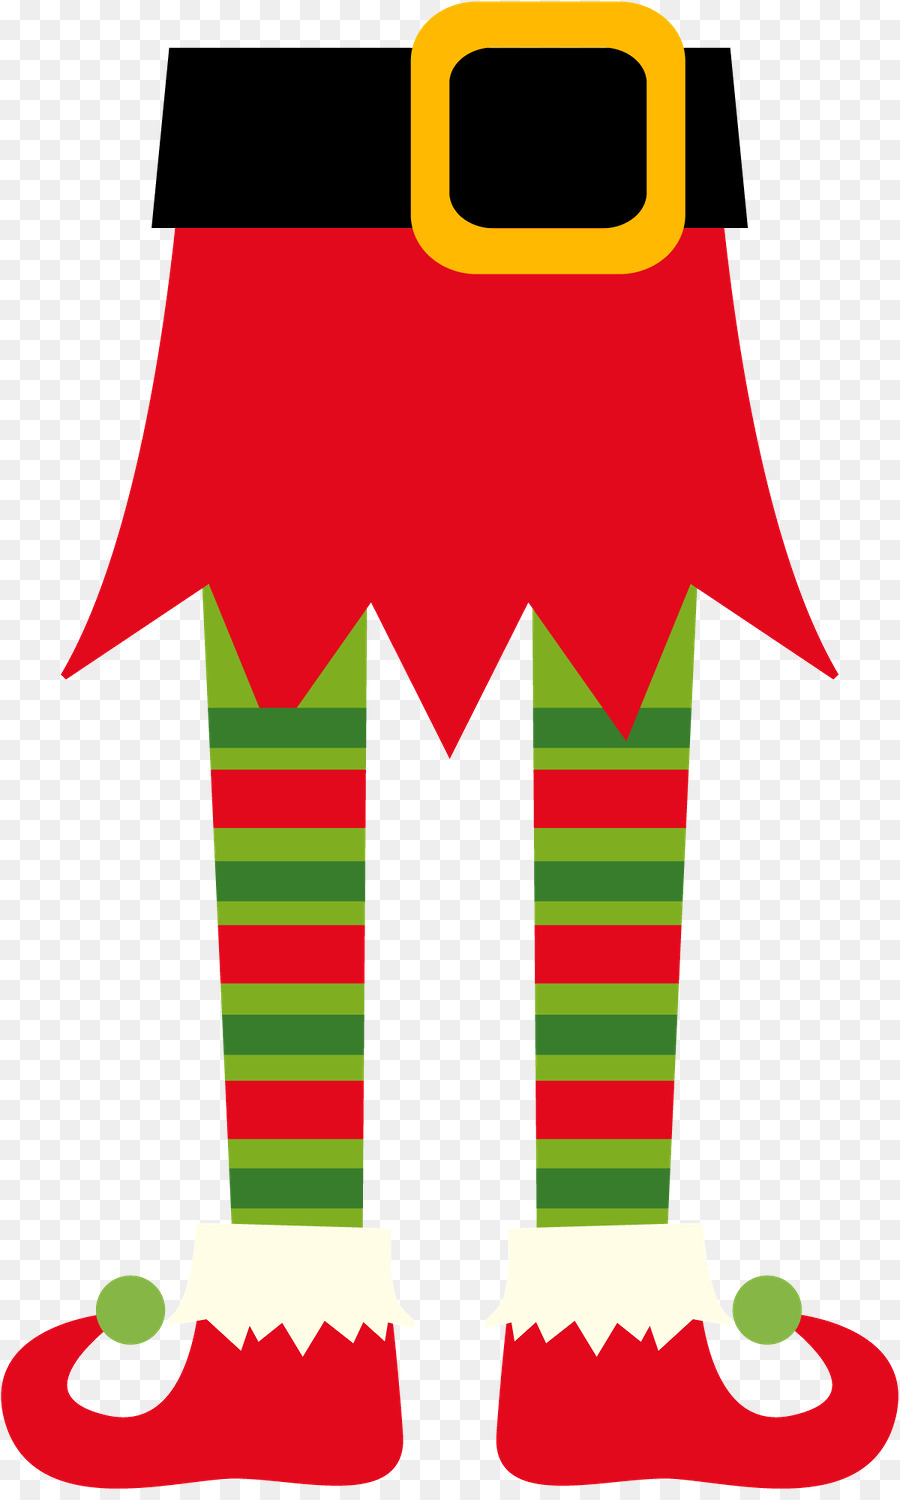 Santa Claus Christmas elf Clip art - santa claus png download - 900*1491 - Free Transparent  png Download.